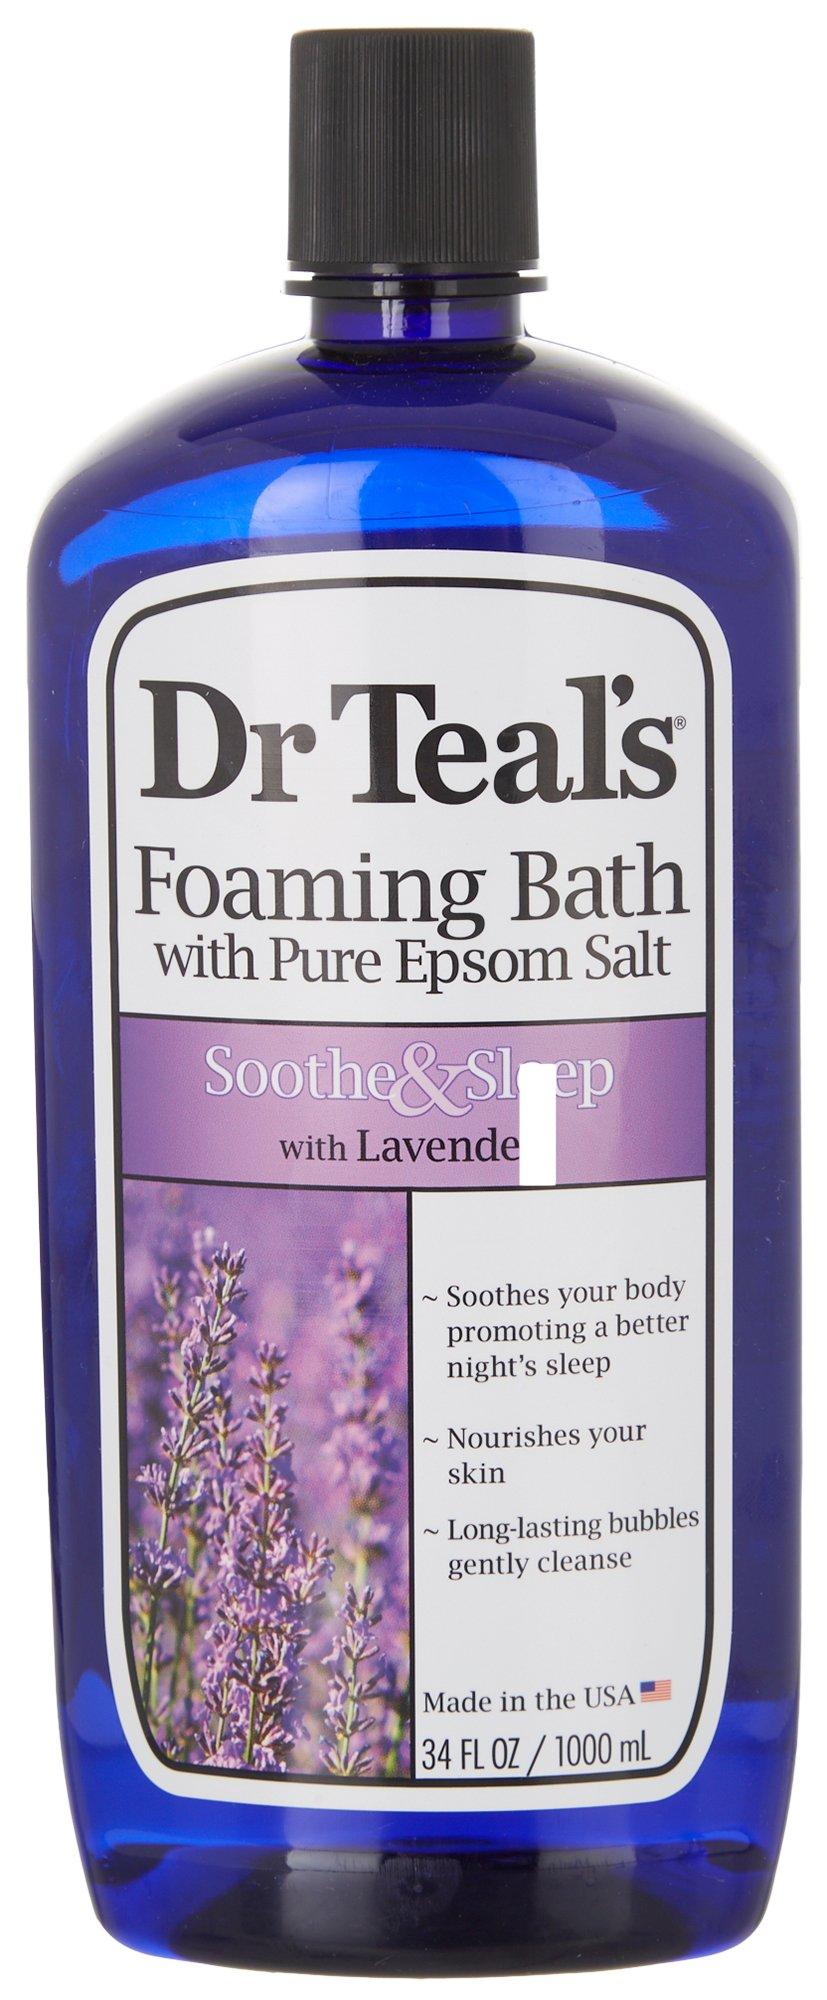 Dr. Teals Pure Epsom Salt & Lavender Bath Foam 34 fl. oz.